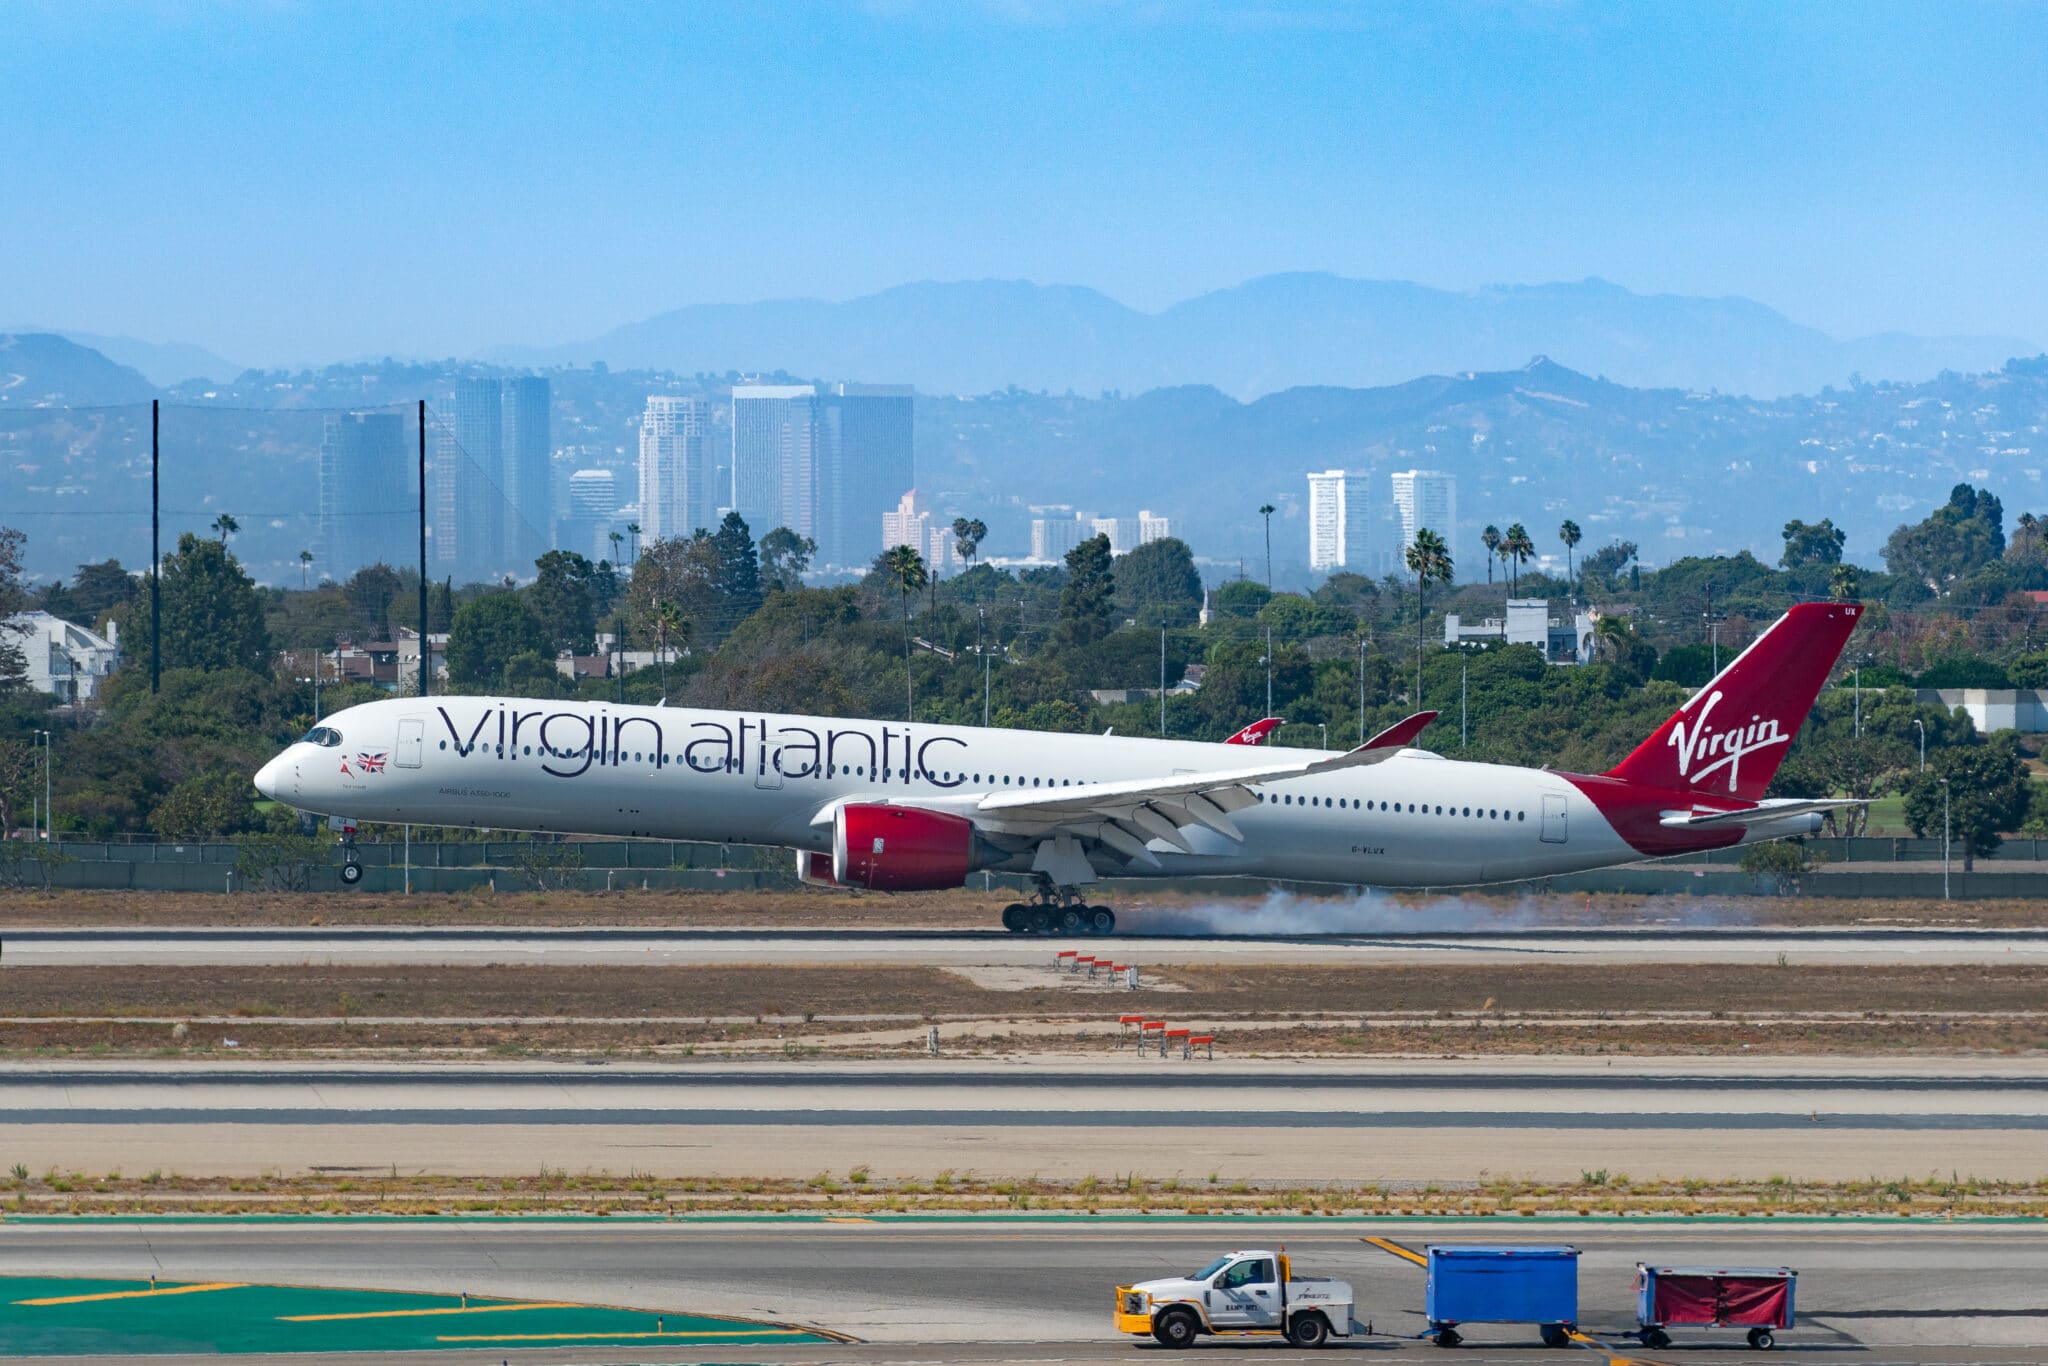 Virgin Atlantic airlines Airbus A350-1041 arrives at Los Angeles international Airport in Los Angeles, California